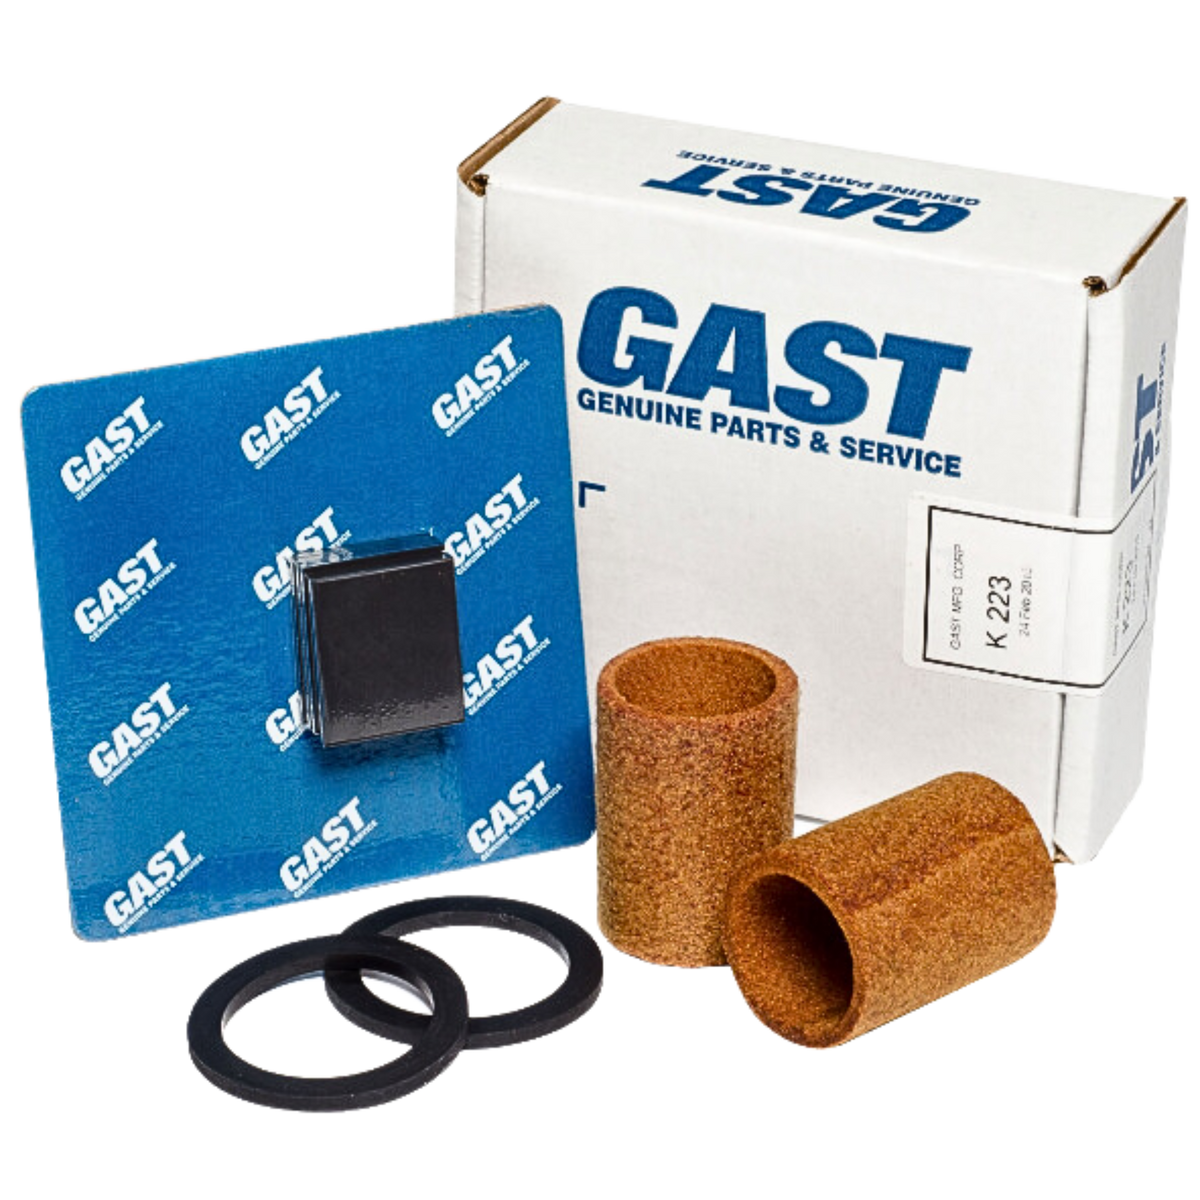 Gast | 0822/1022 Oil-less Service Kit | K223 used on gast product line